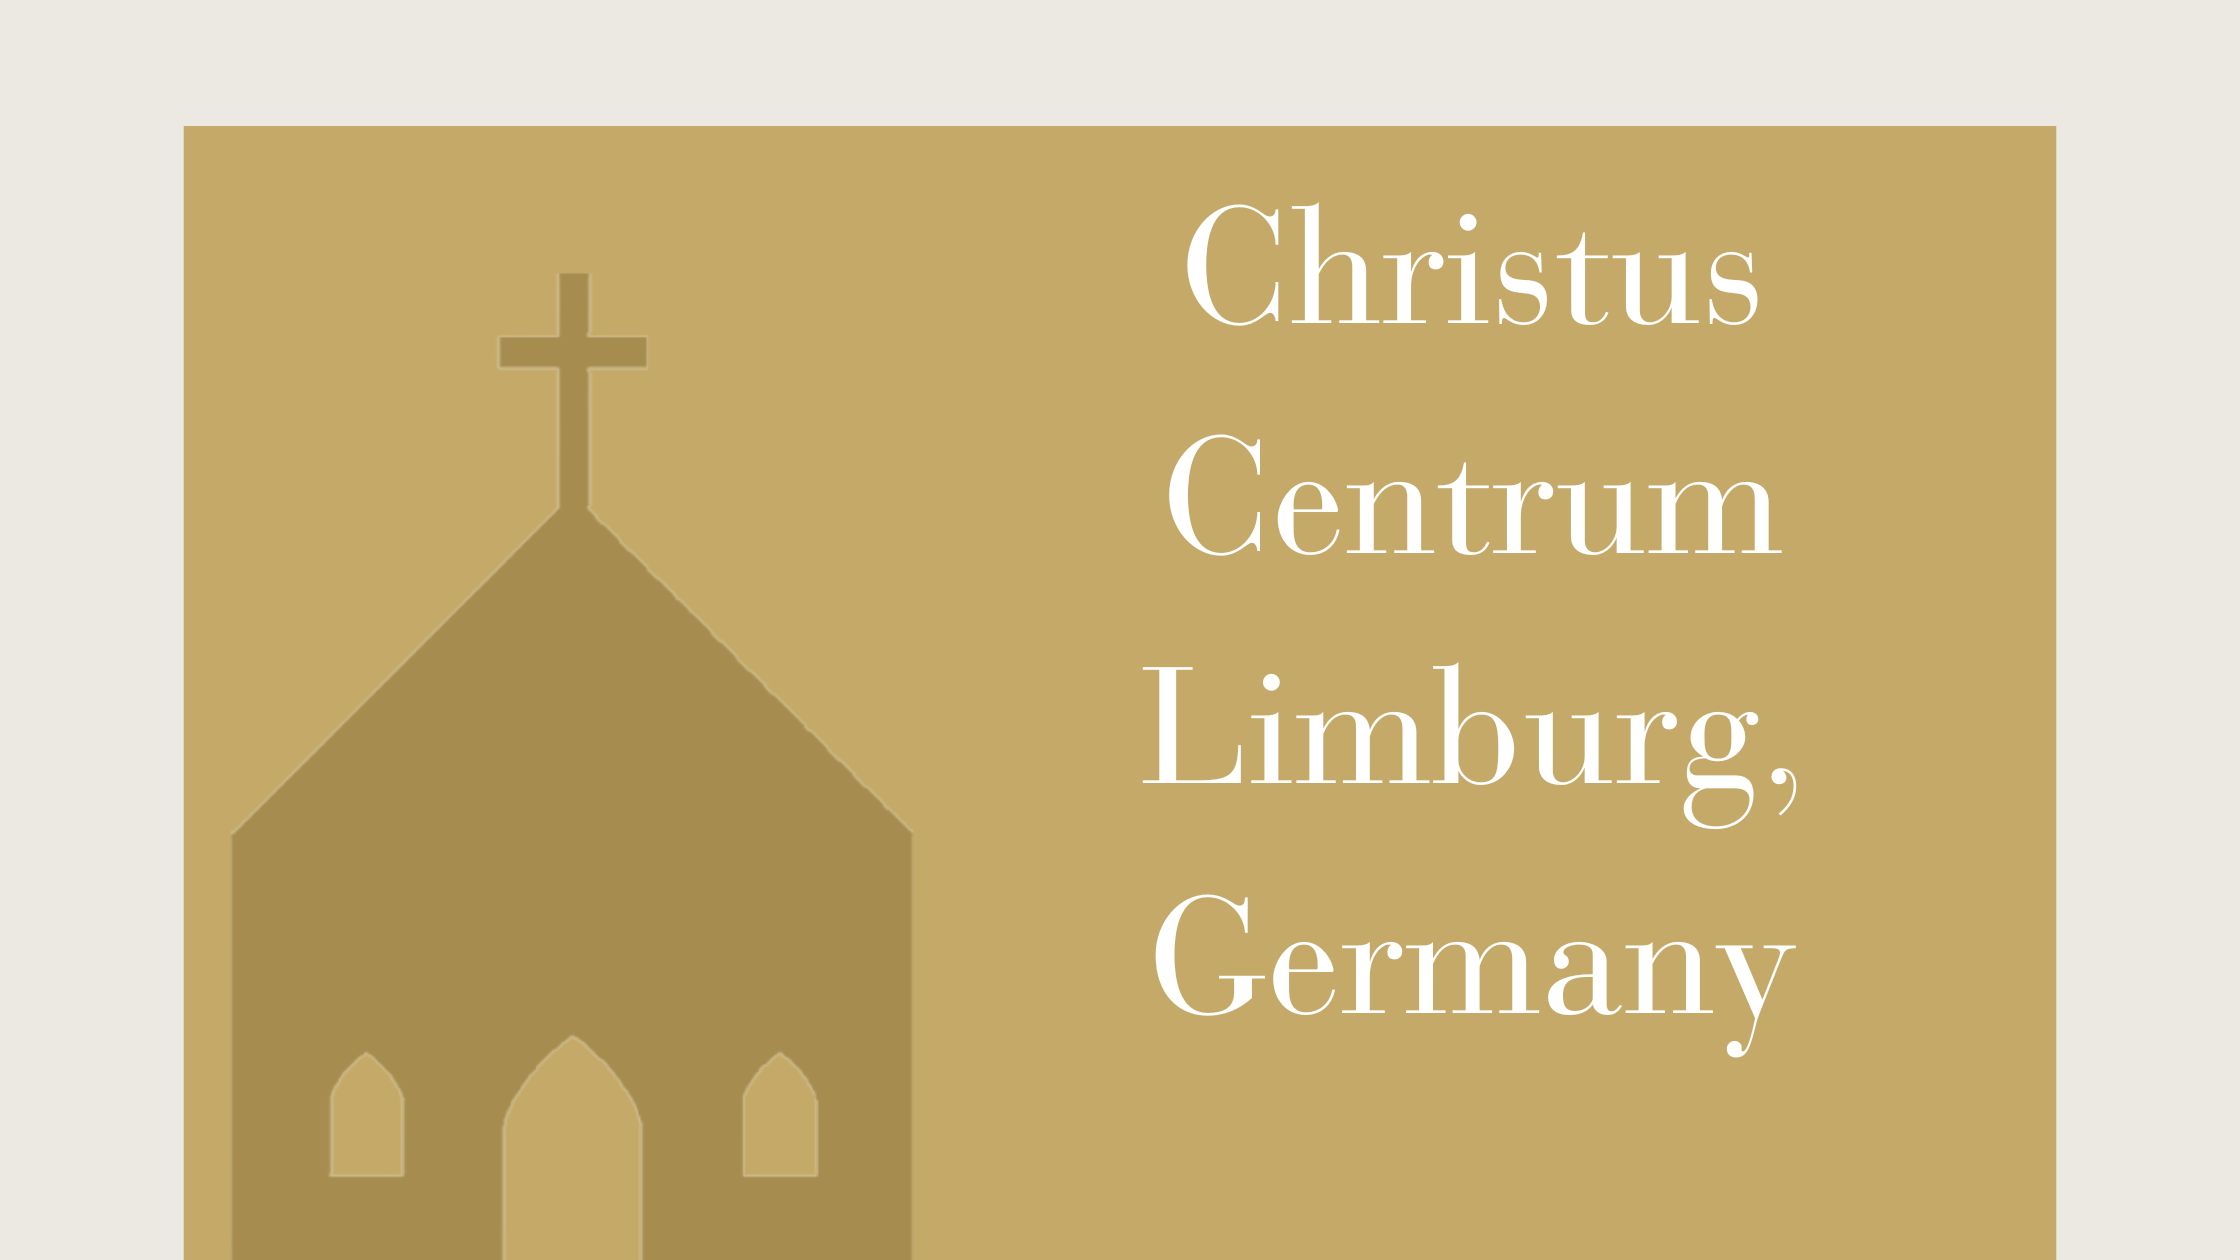 Christus Centrum Limburg, Germany